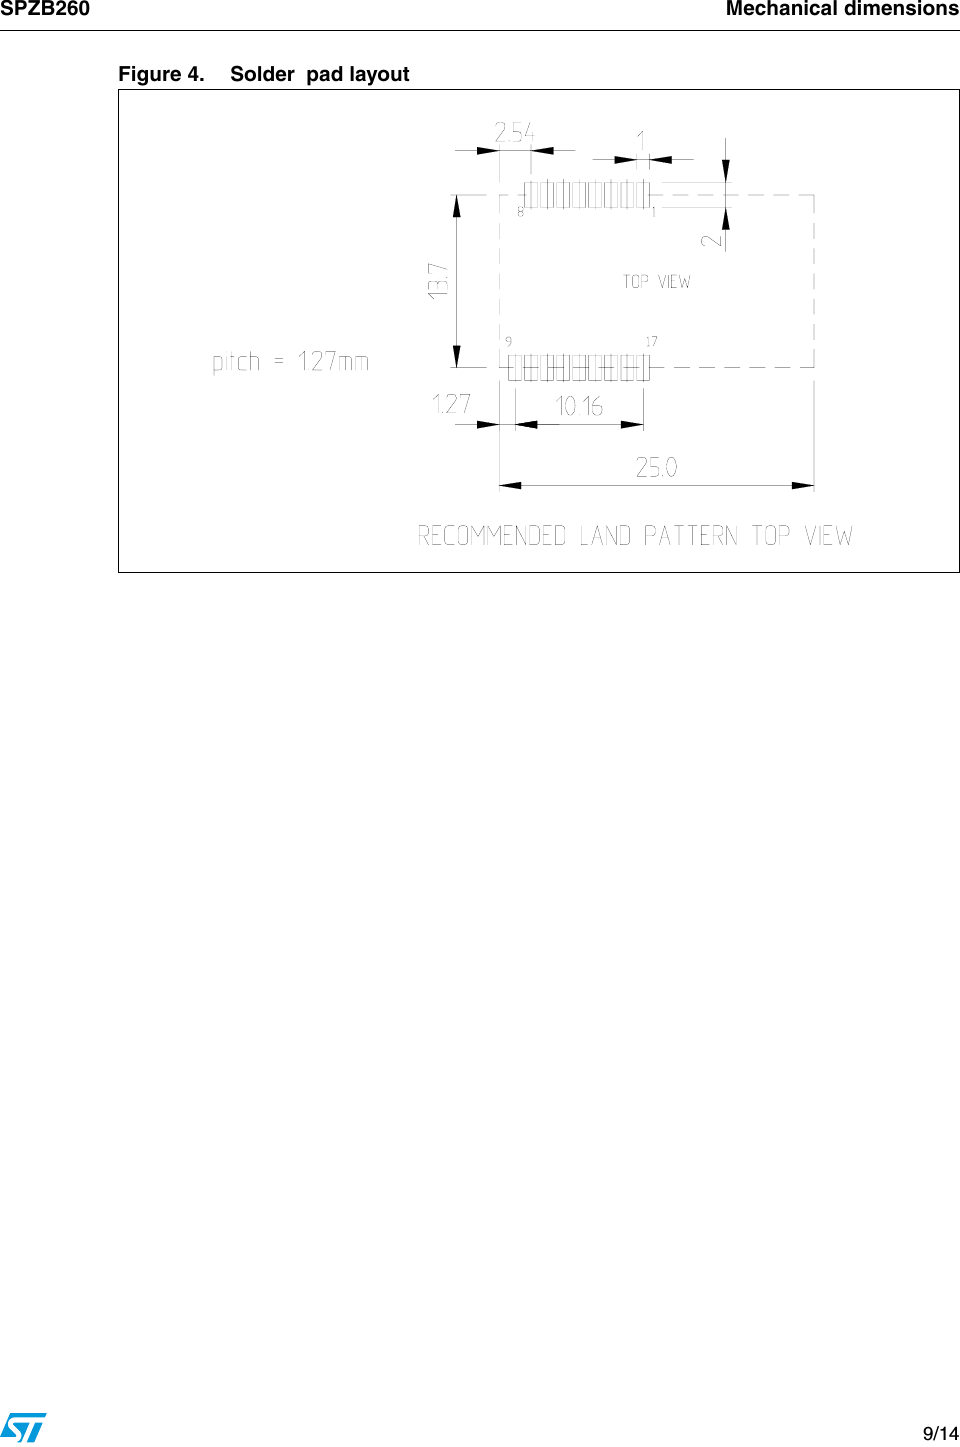 SPZB260 Mechanical dimensions   9/14Figure 4. Solder  pad layout